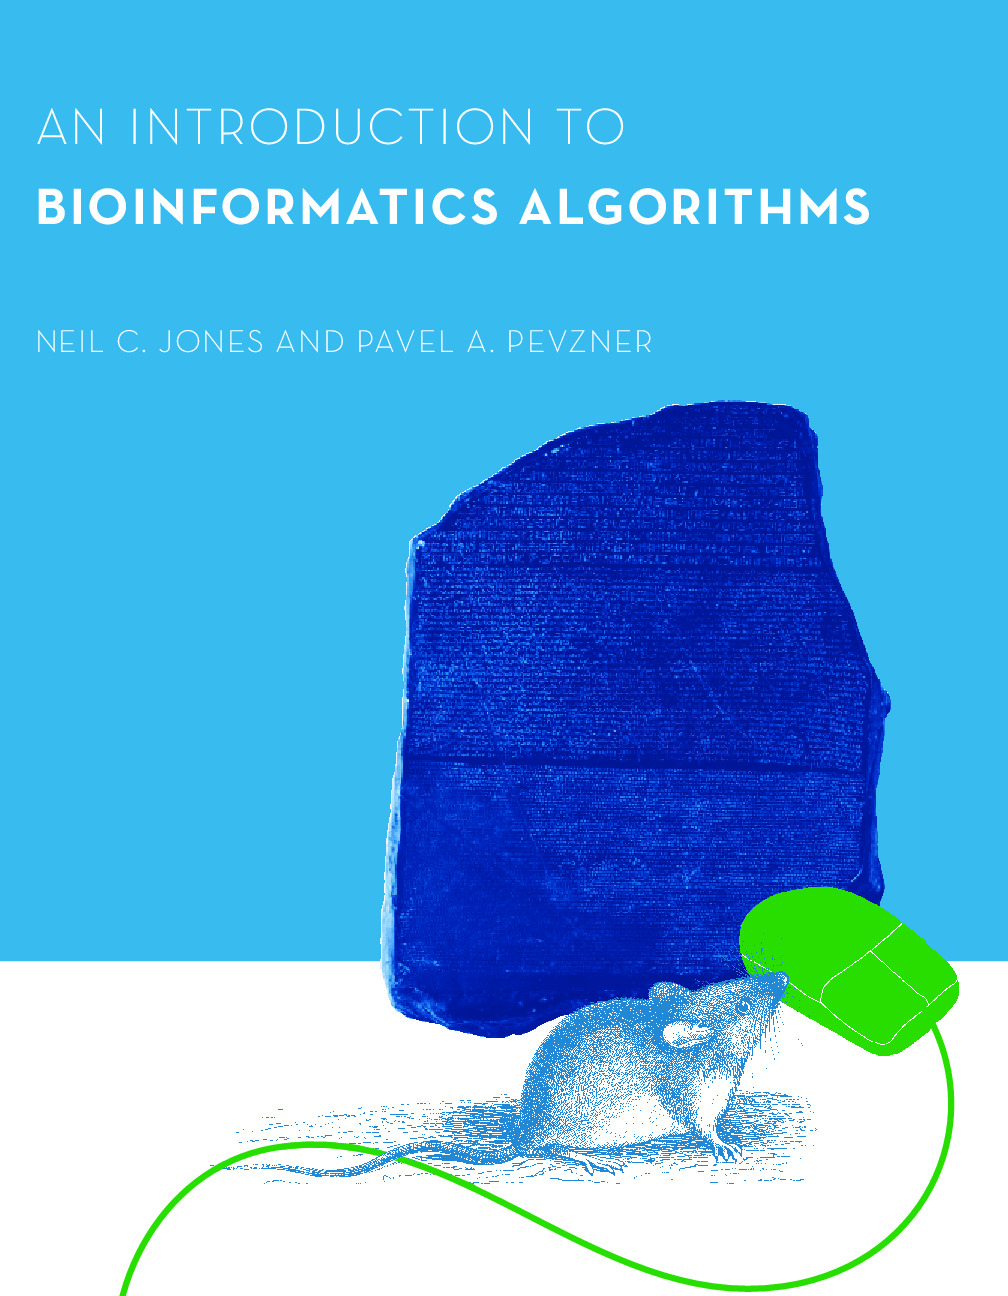 Intro to Bioinformatics Algorithms